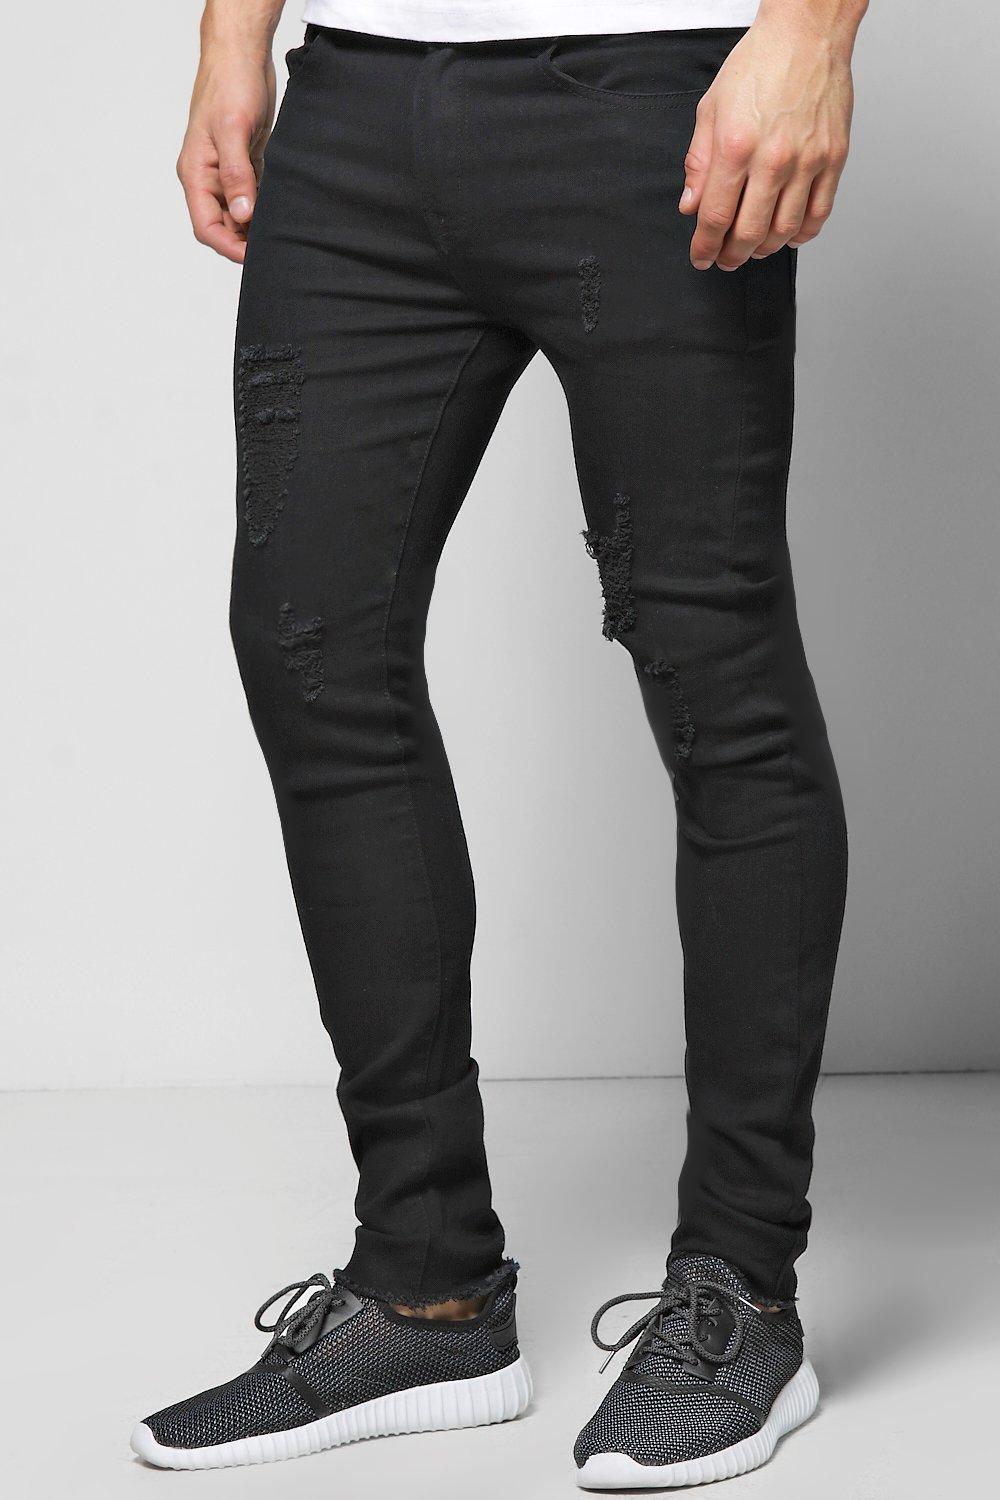 black ripped cuffed jeans